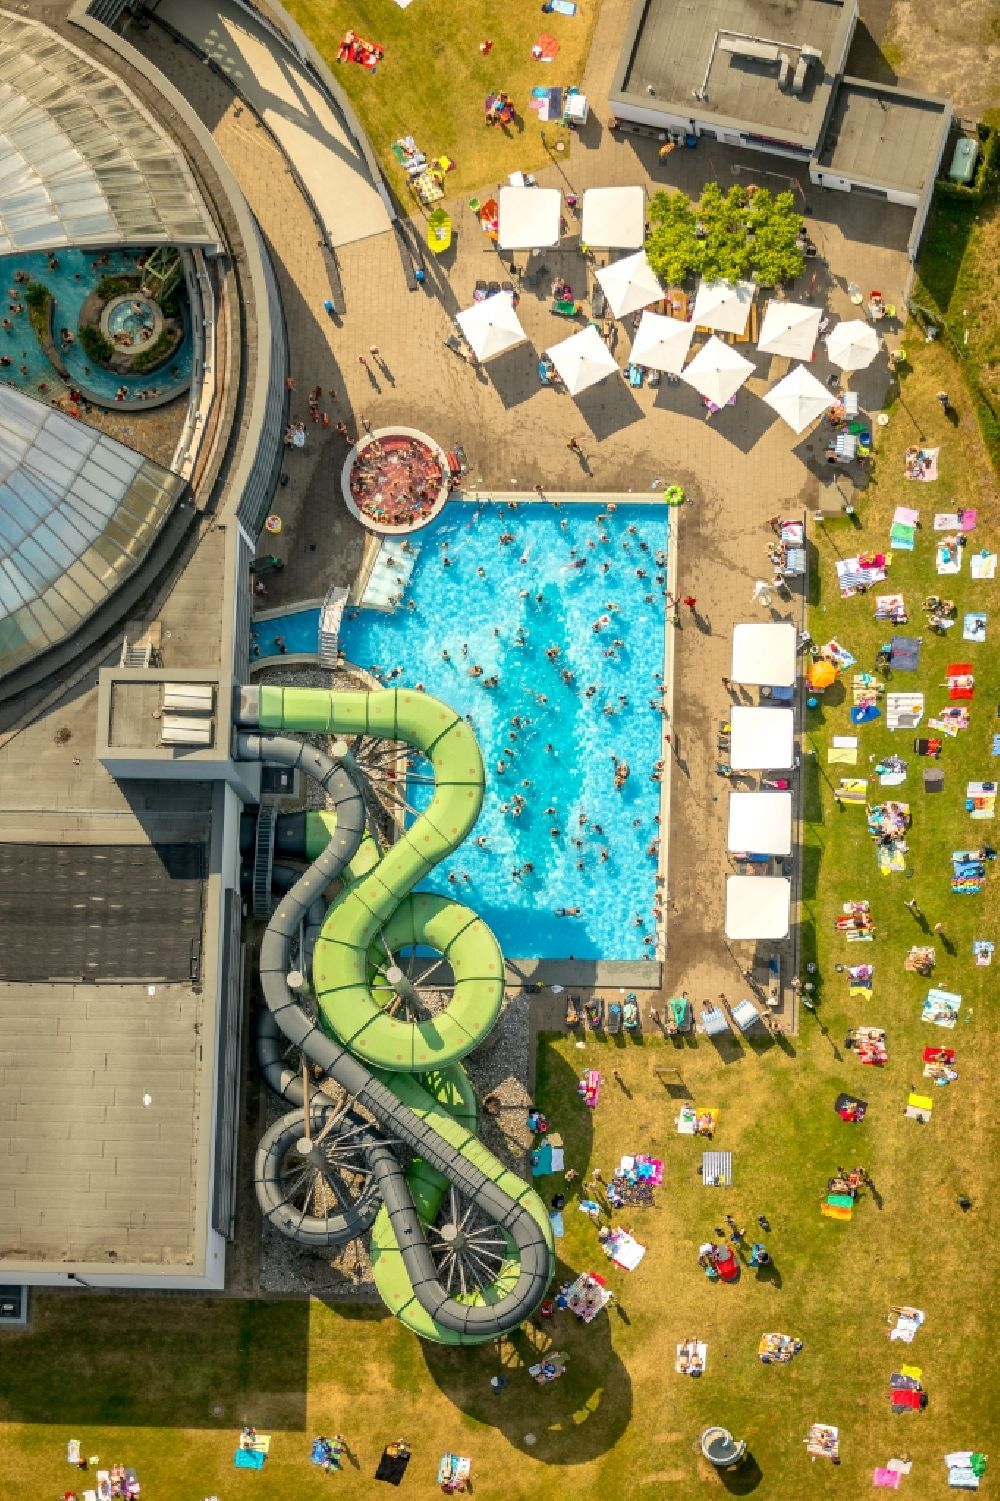 Aerial image Oberhausen - Indoor and outdoor facilities of the recreational facility Aqua Park Oberhausen in Oberhausen in North Rhine-Westphalia